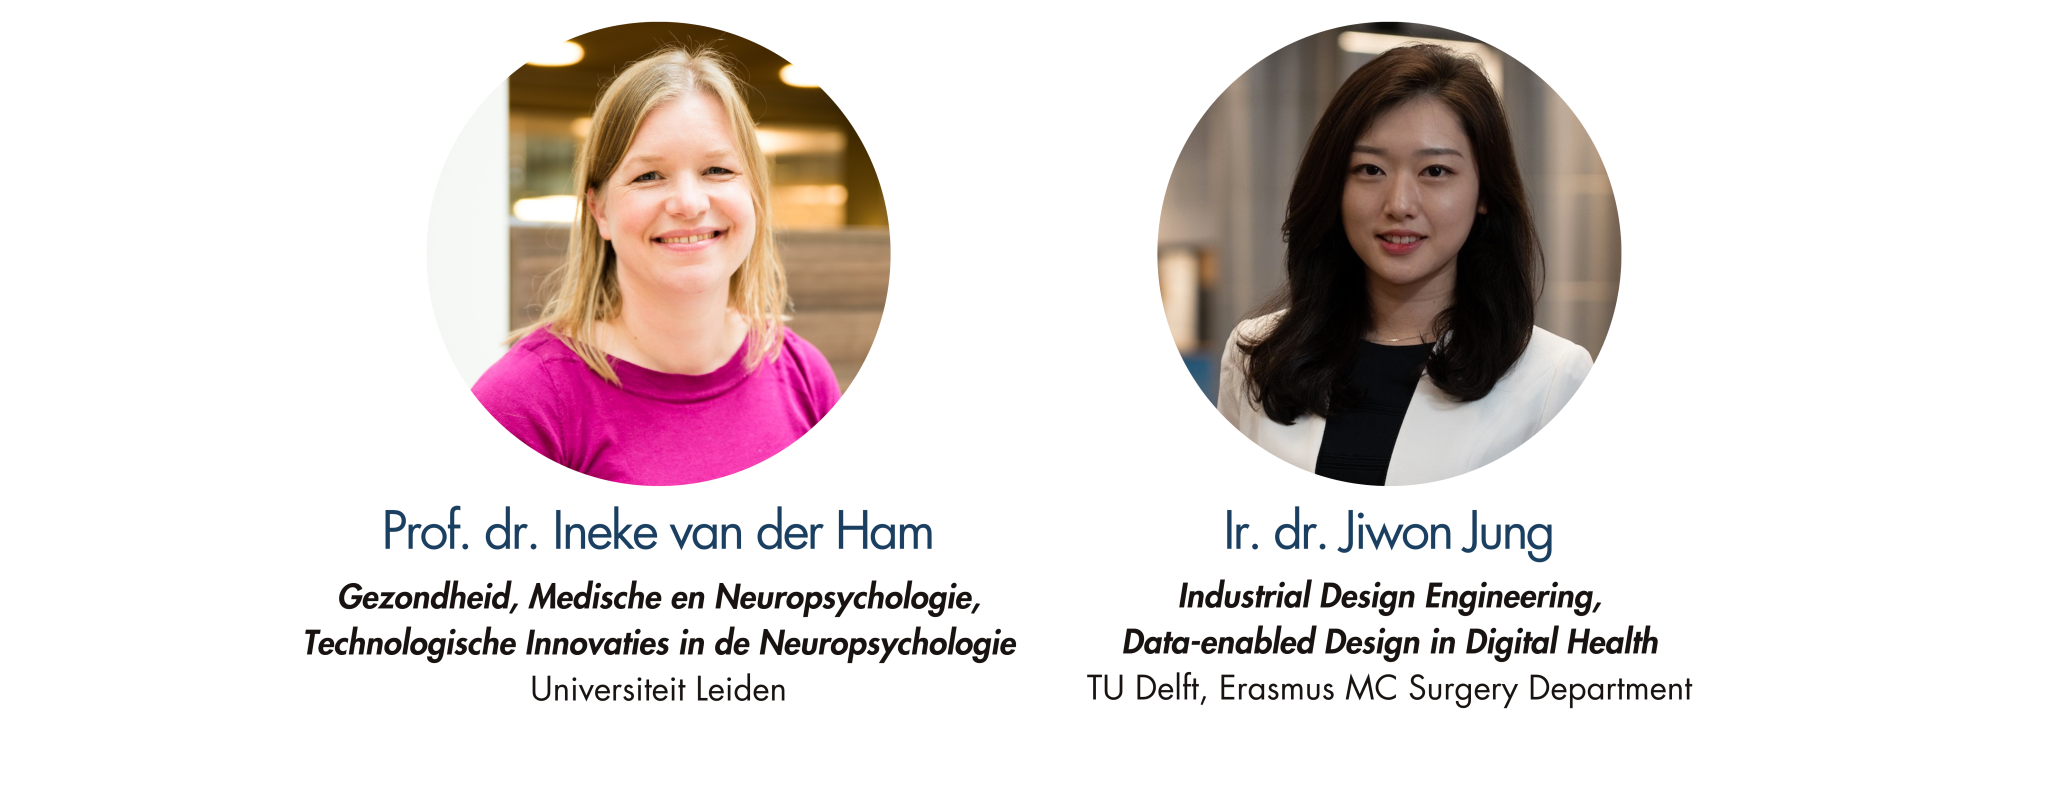 Thema 2: Prof. dr Ineke van der Ham en Ir. dr. Jiwon Jung